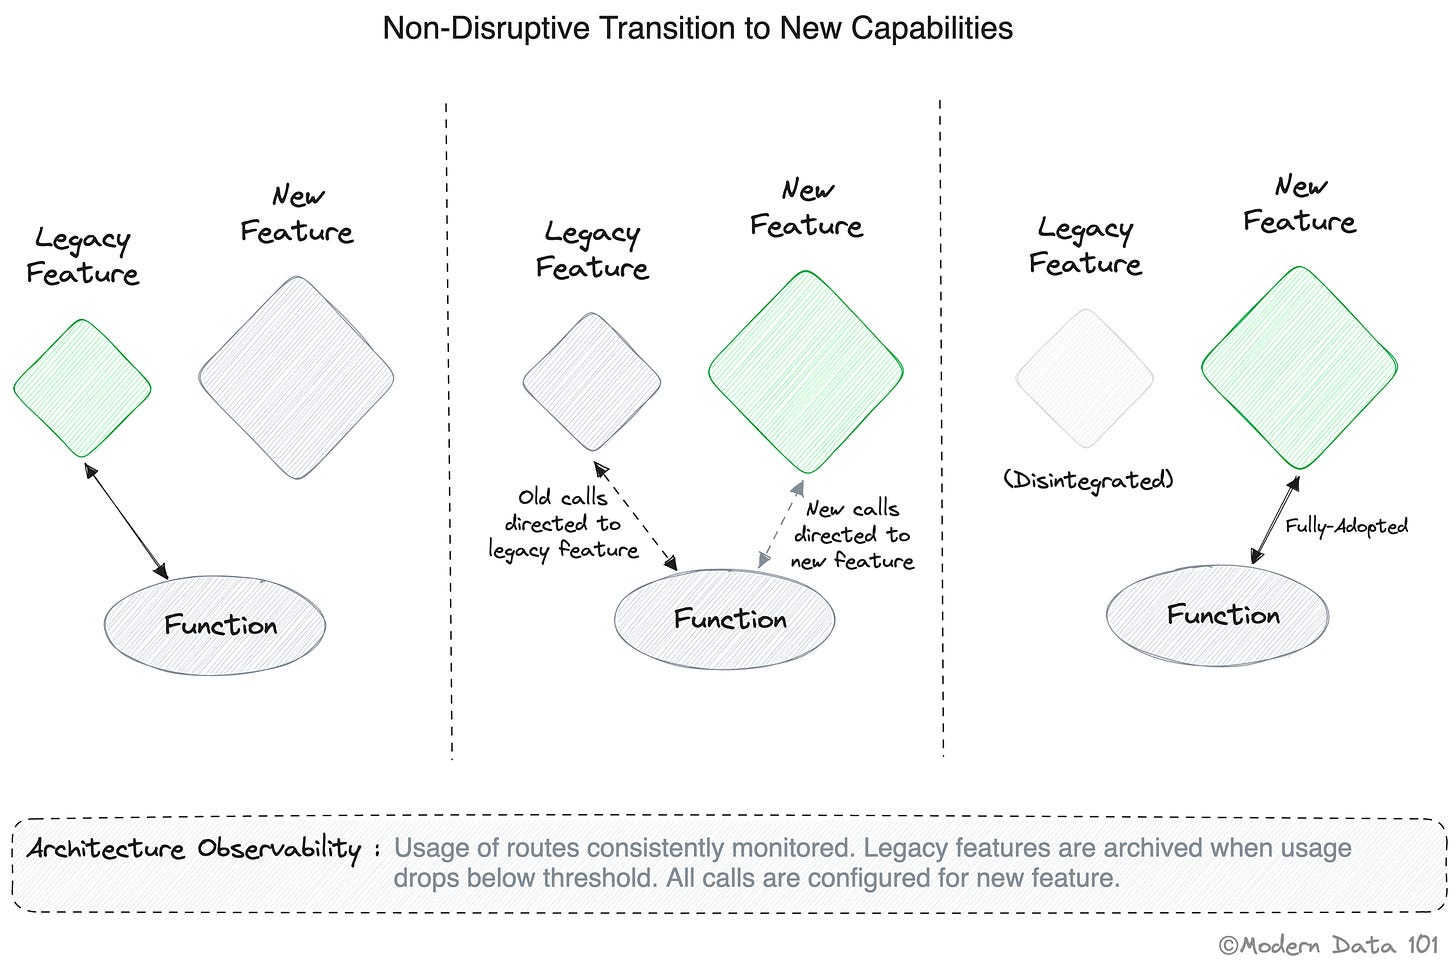 Representation of Non-Disruptive Transitions into Data Product Capabilities